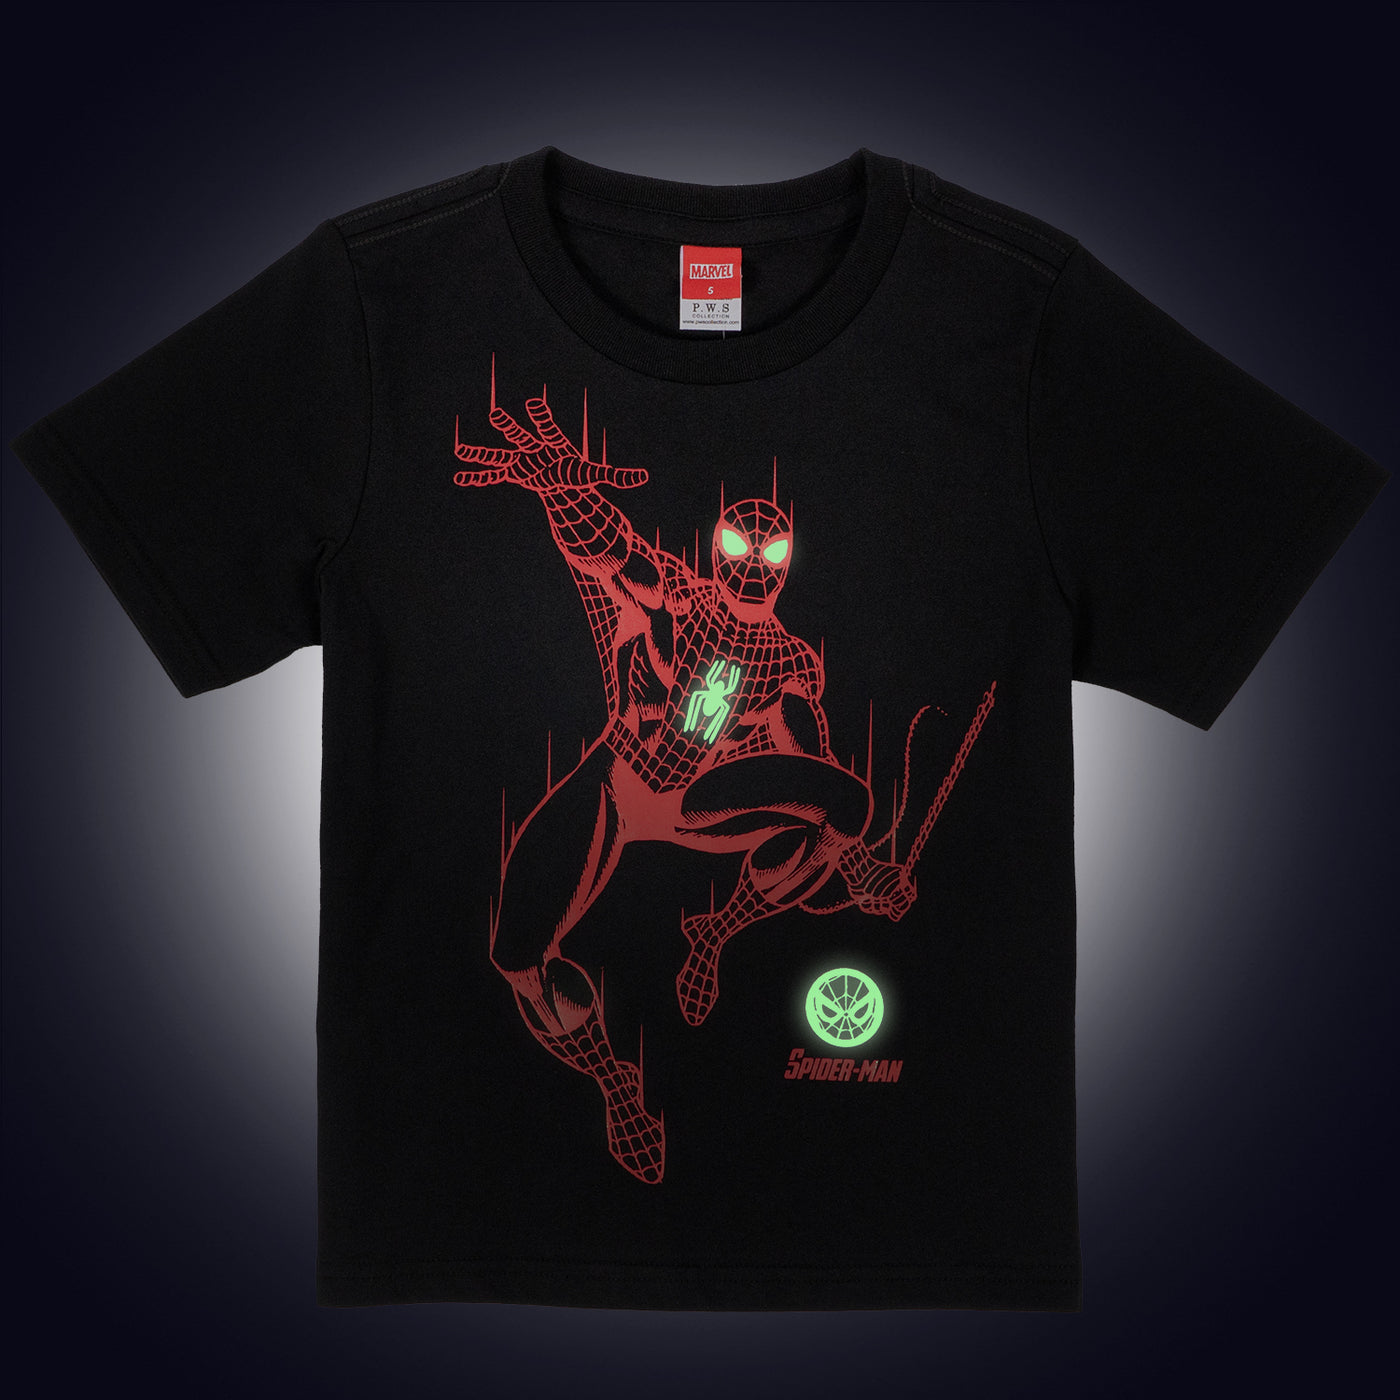 Marvel Boy Glow In The Dark Spider-Man T-Shirt - เสื้อยืดเด็กมาร์เวล เทคนิคเรืองแสงในที่มืดลายสไปเดอร์แมน